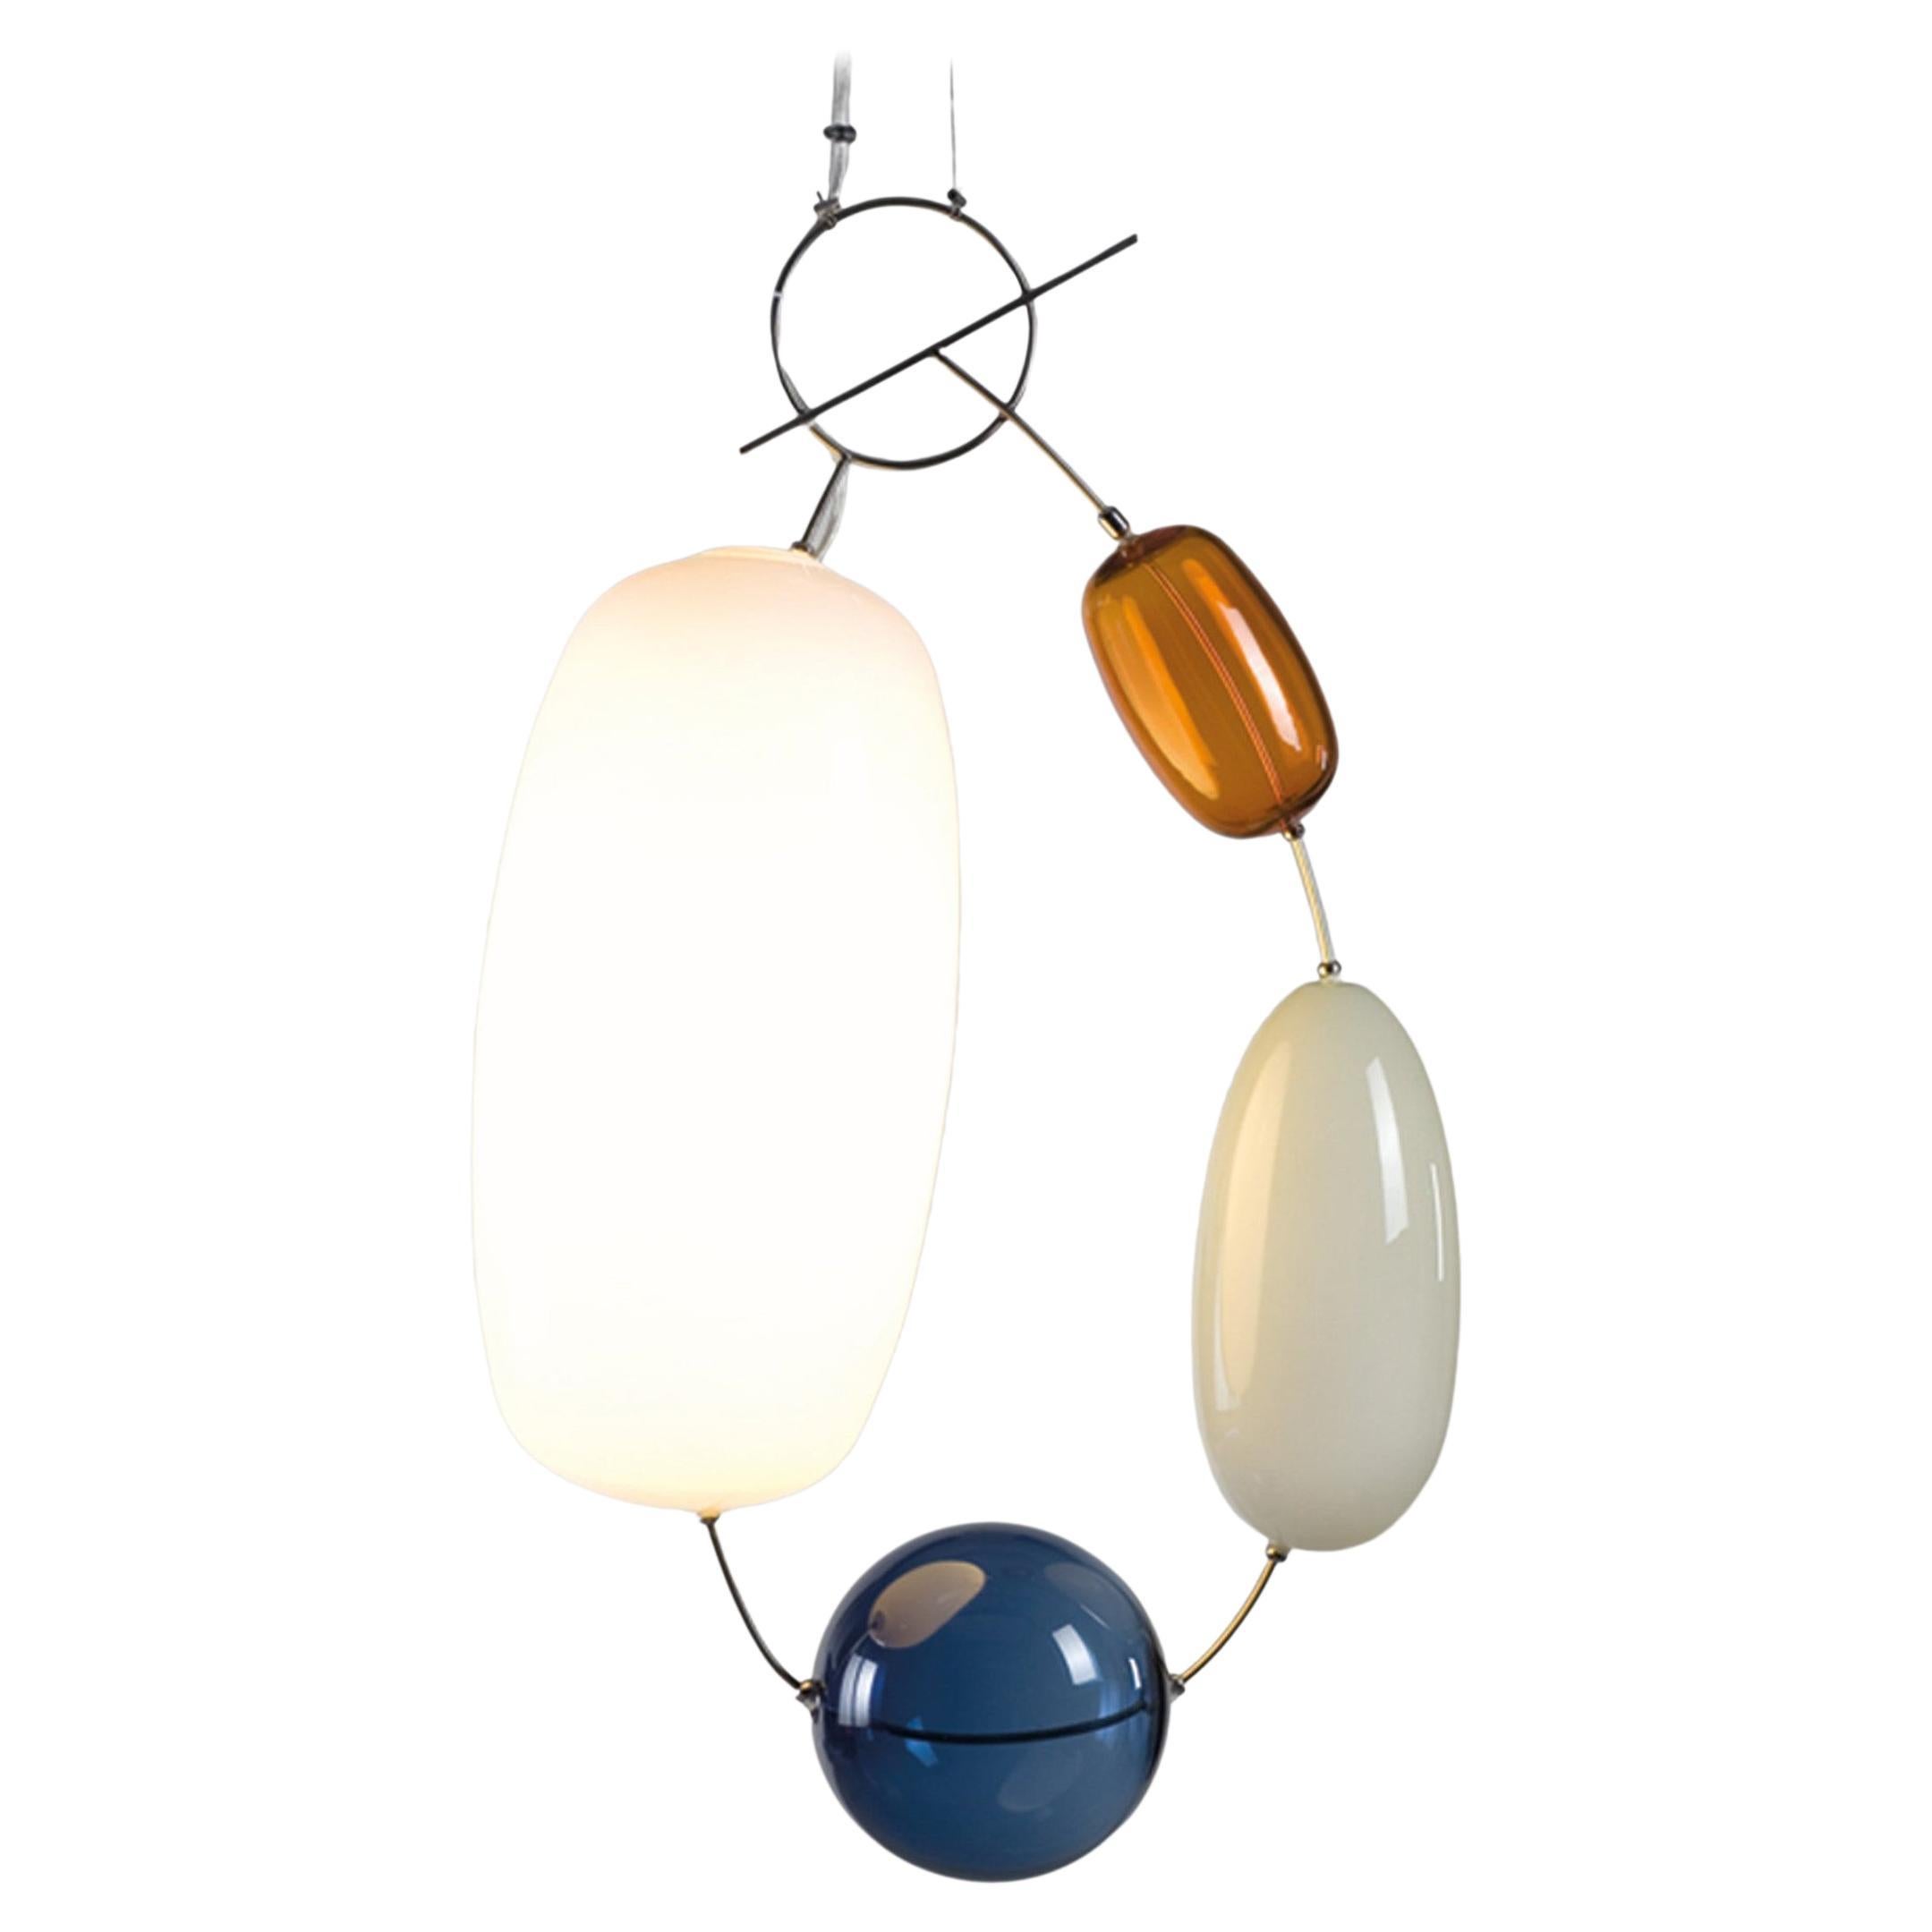 Limited Edition Finnish Blown Glass 'Jewel' Lamp by Katriina Nuutinen 